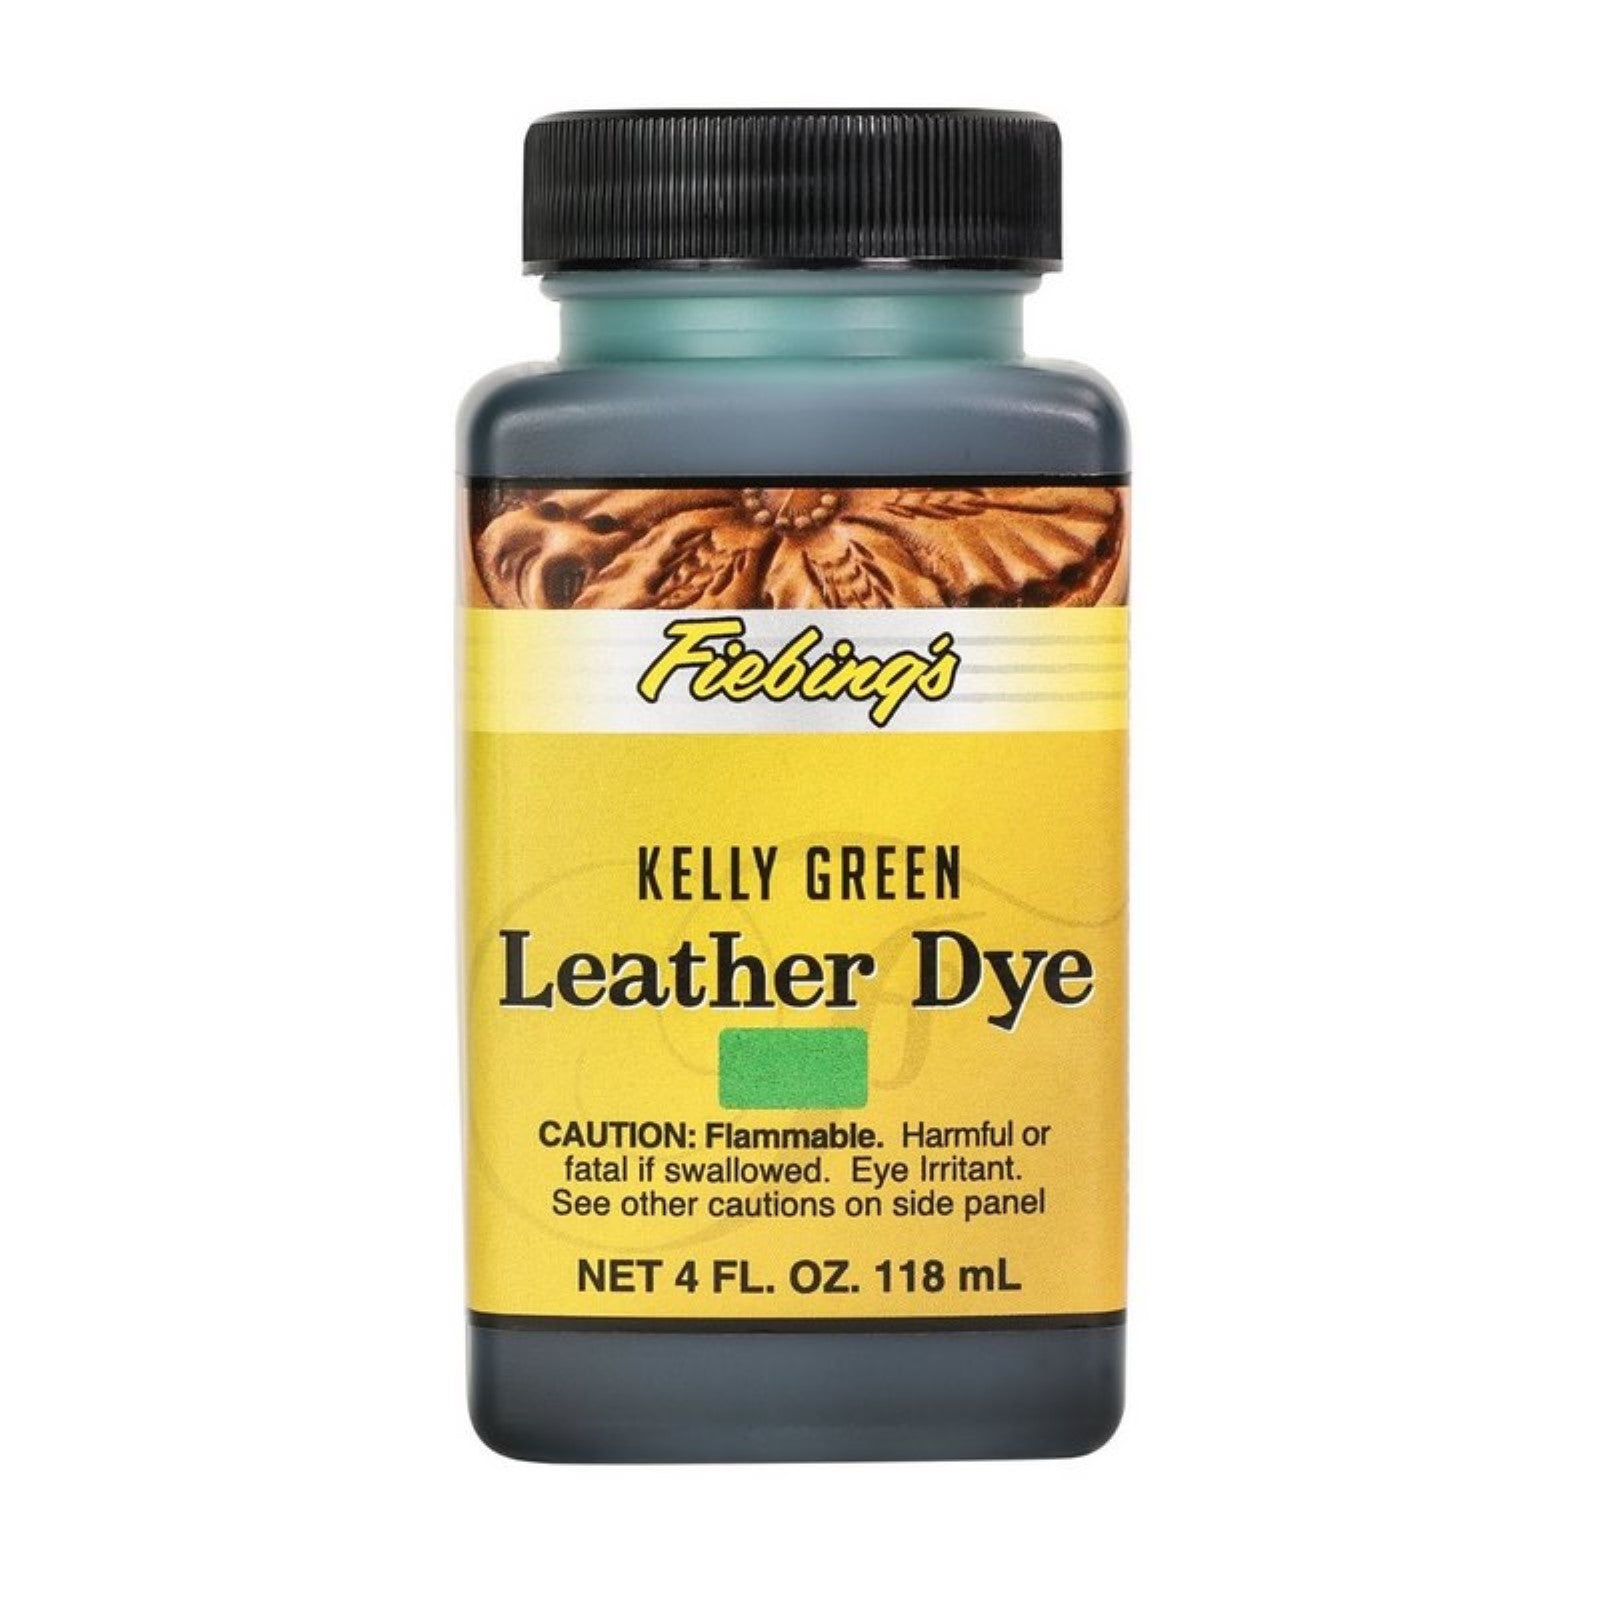 Fiebings Leather Dye, 4 oz, Kelly Green | The Leather Guy